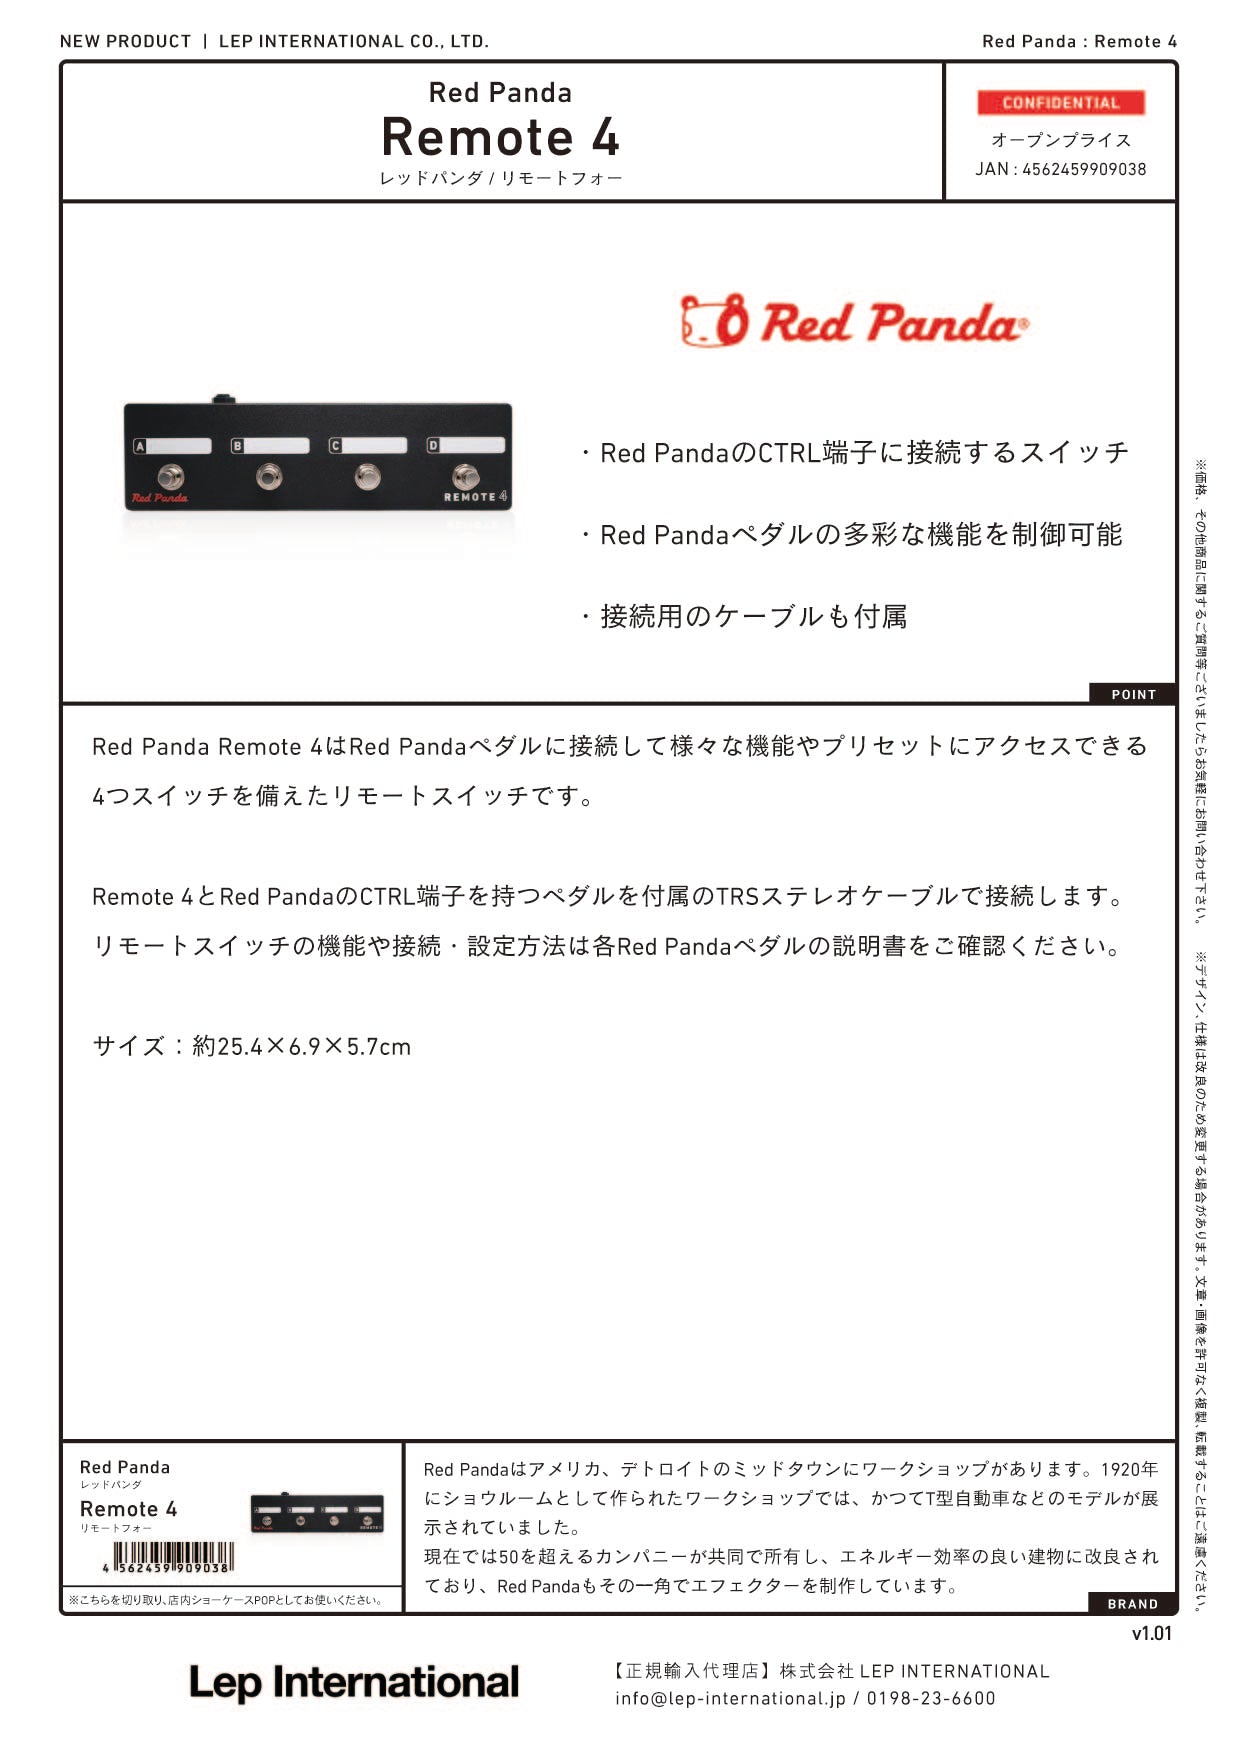 Red Panda / Remote 4